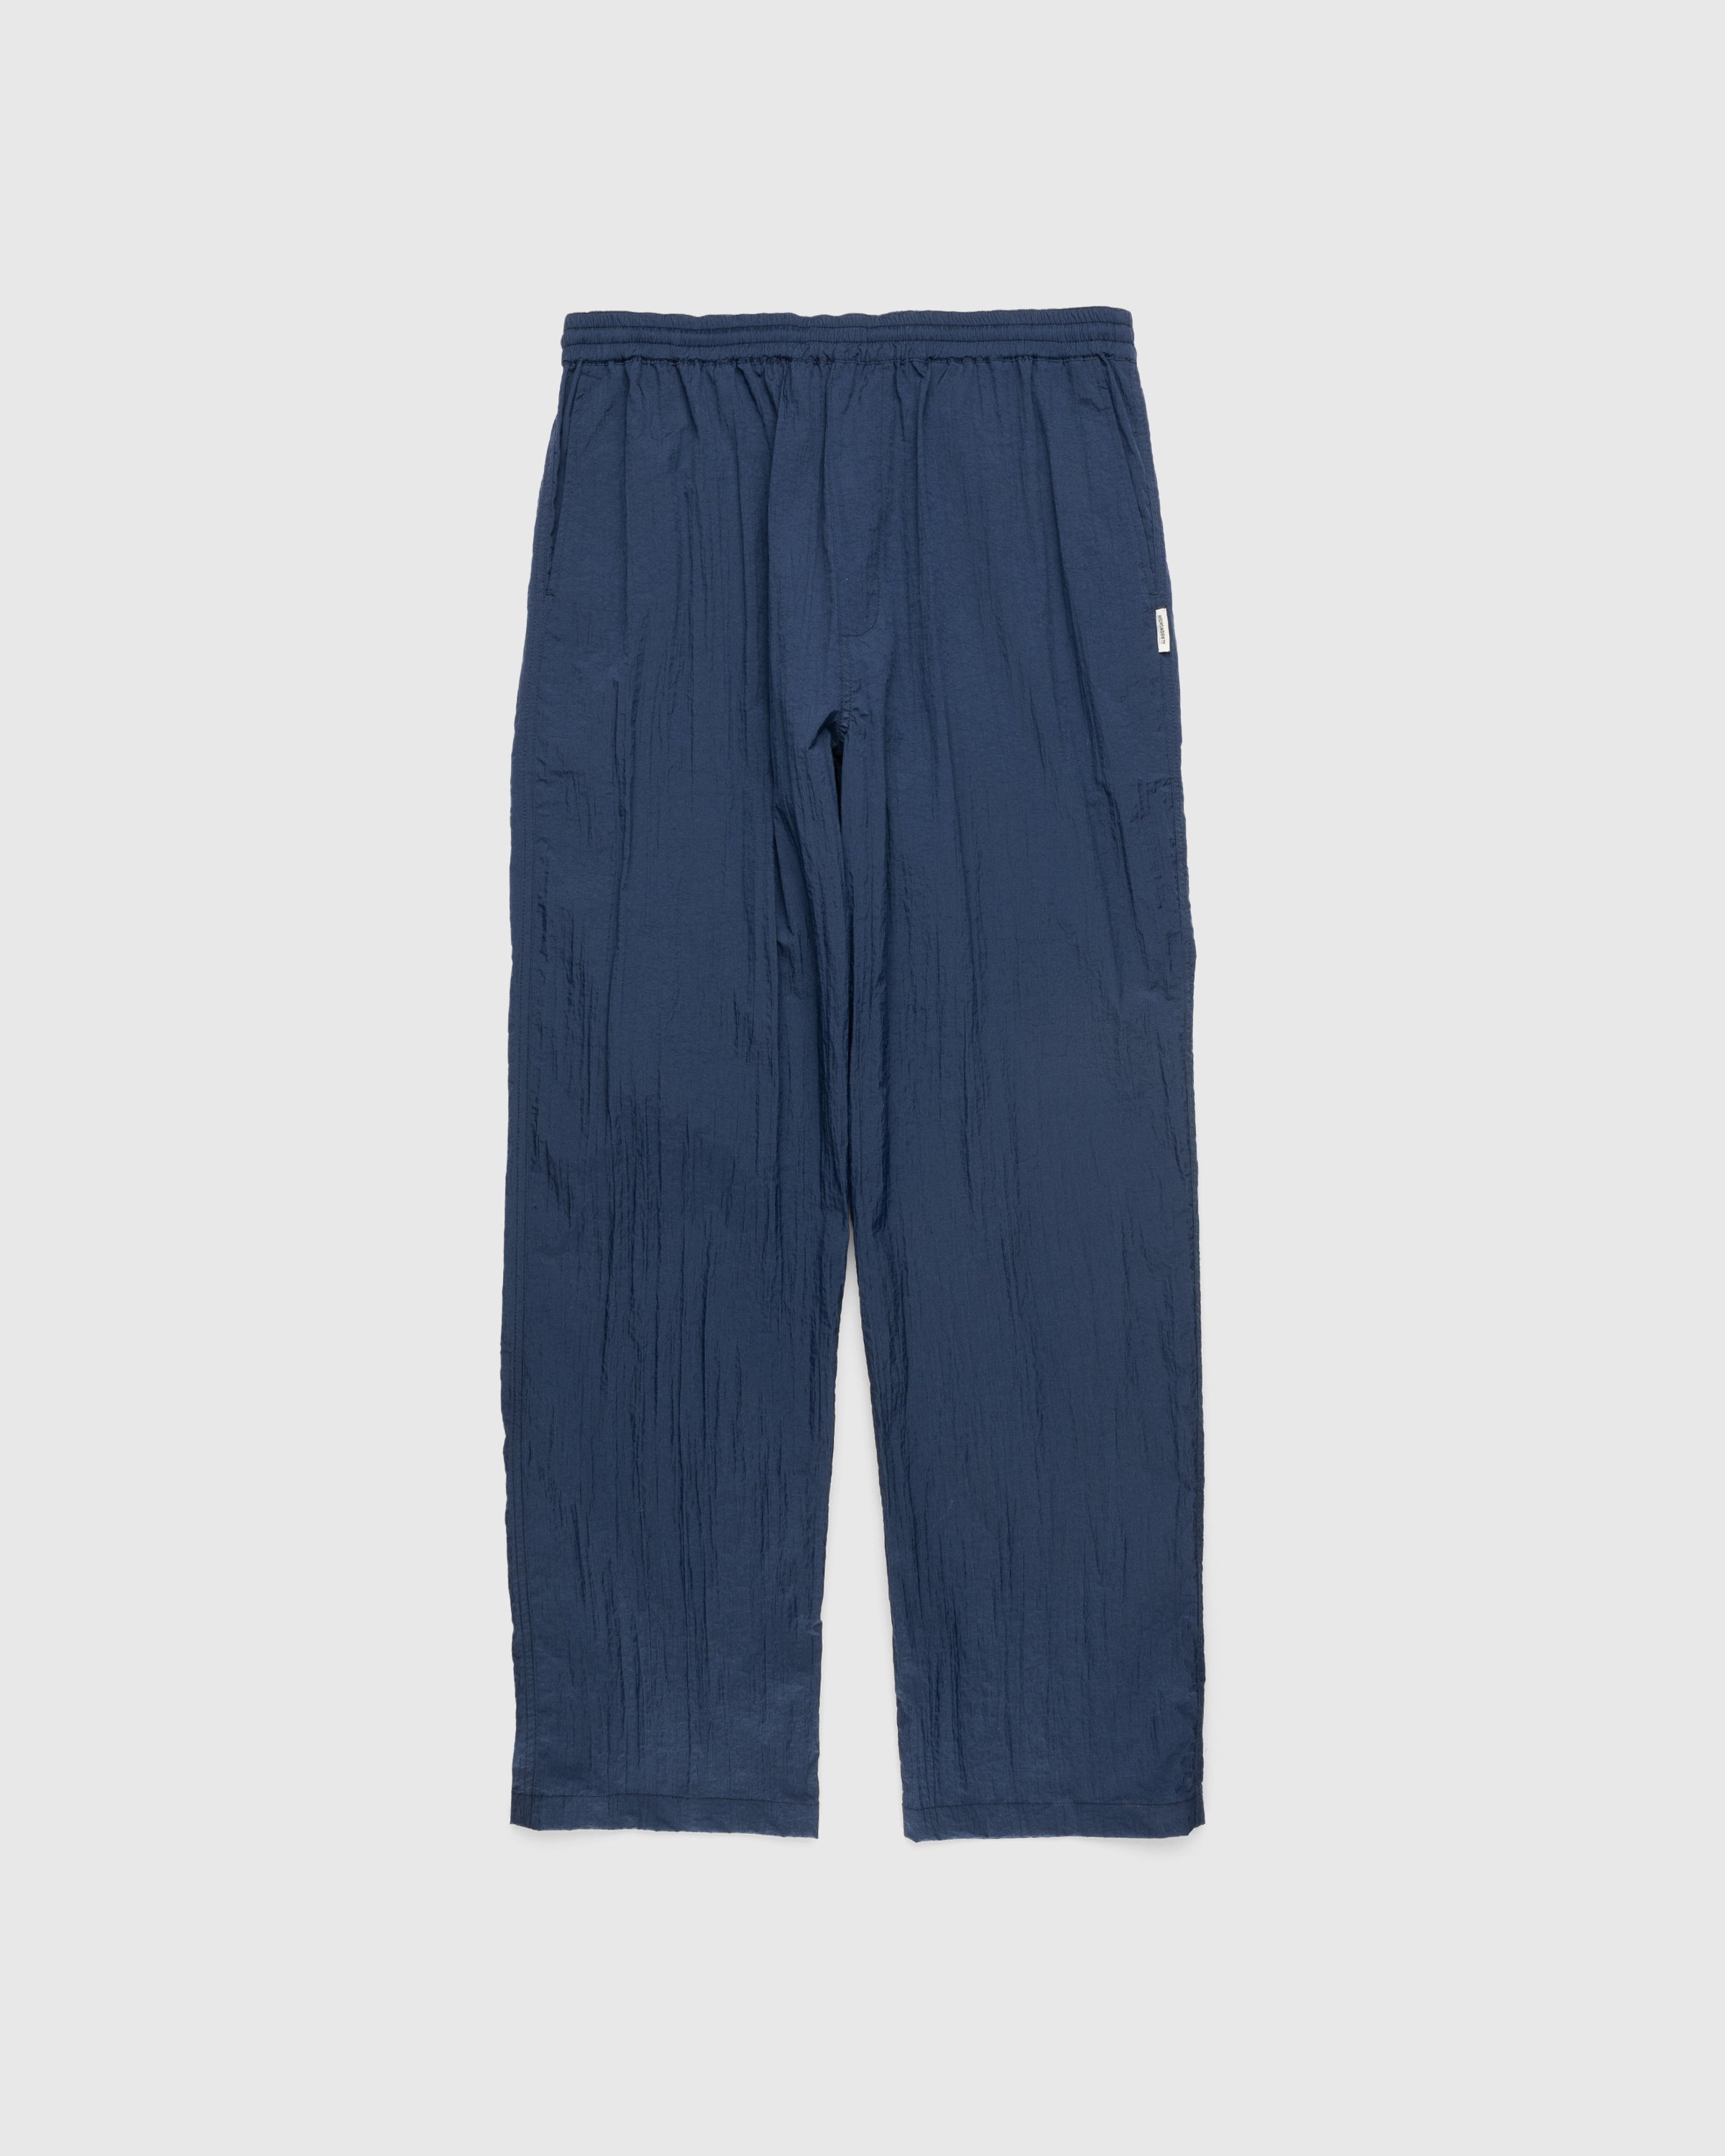 Highsnobiety - Texture Nylon Pants Navy - Clothing - Blue - Image 1